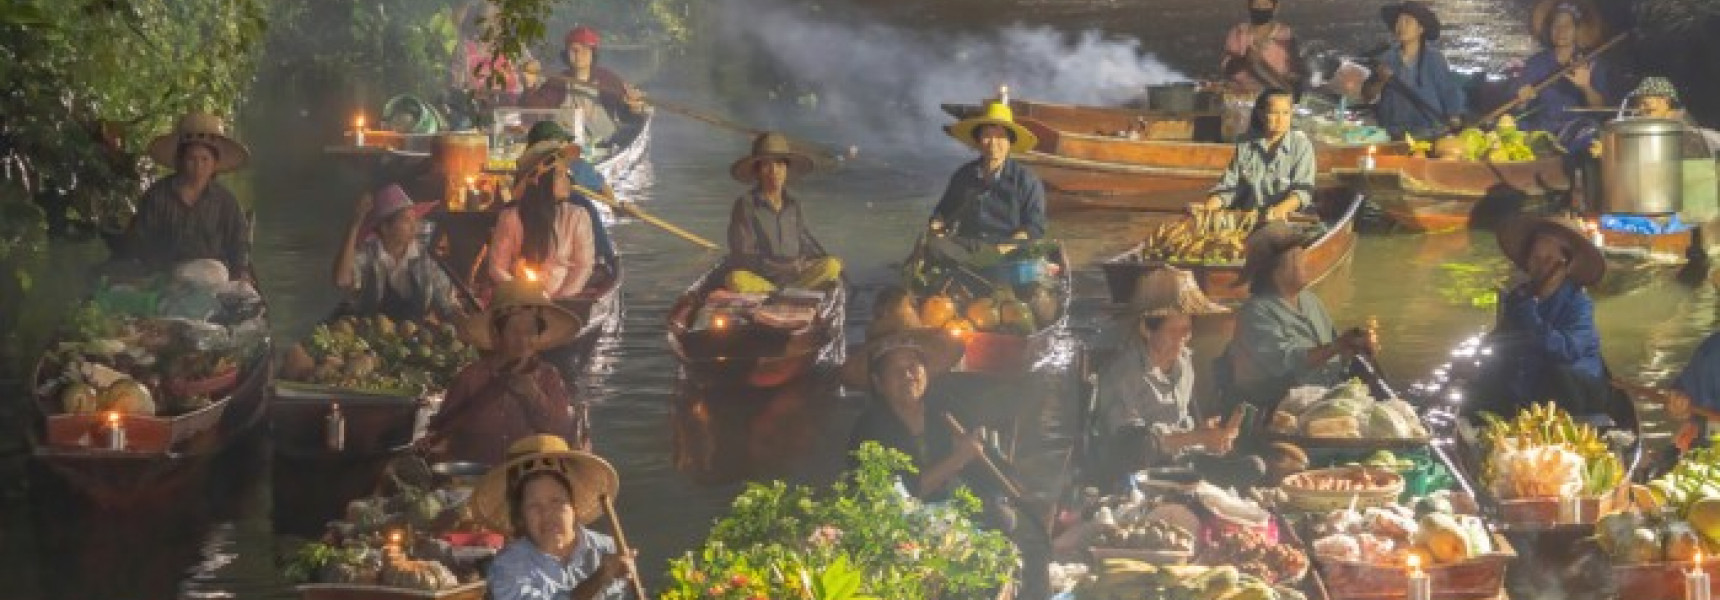 Visit the Floating Food Markets of Vietnam